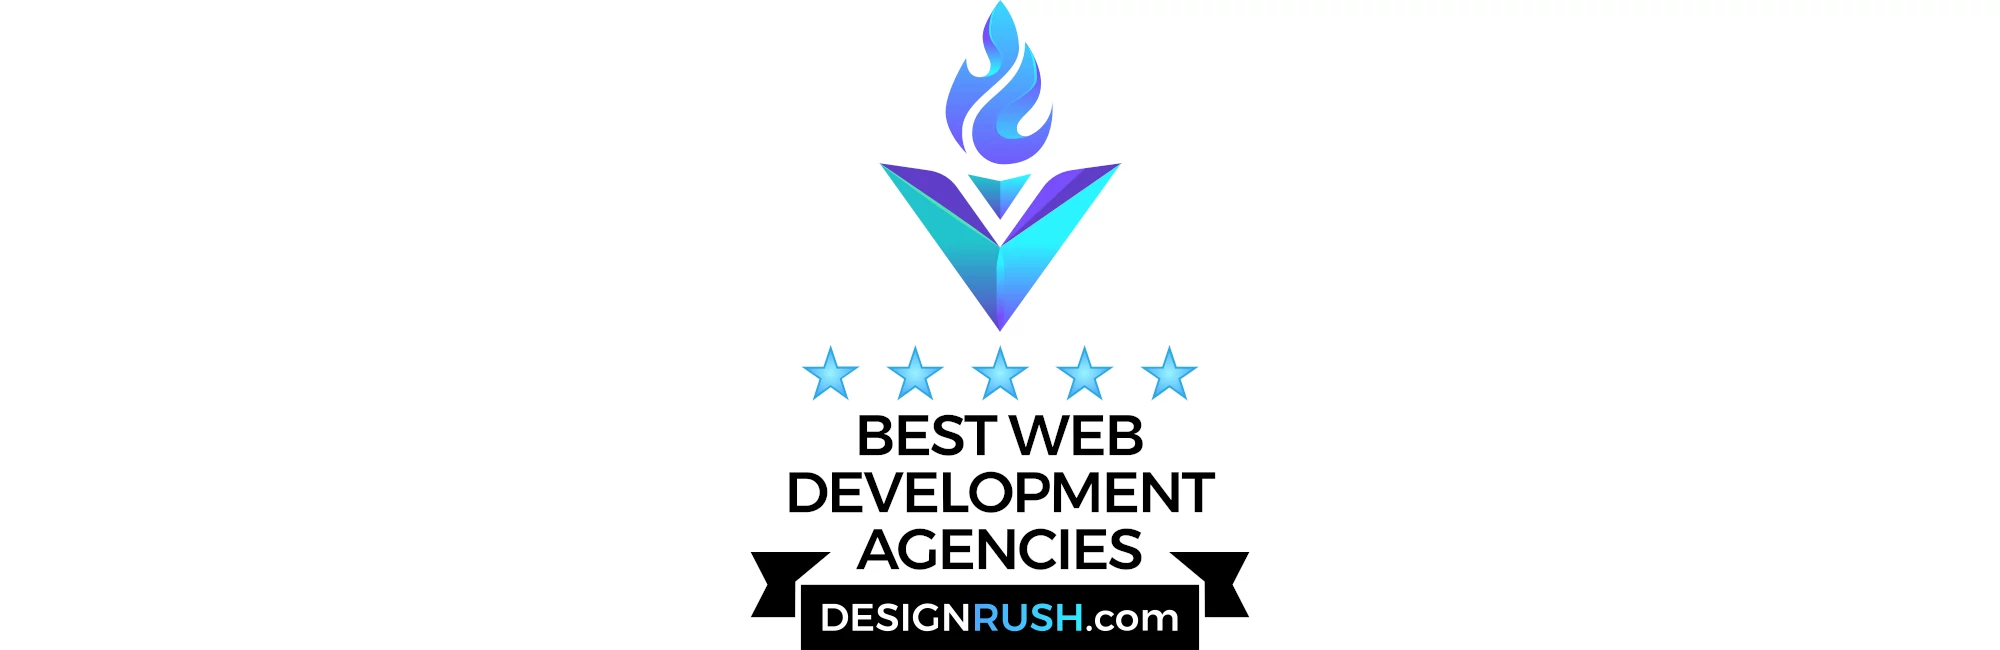 badge-designrush-top25-development-agencies